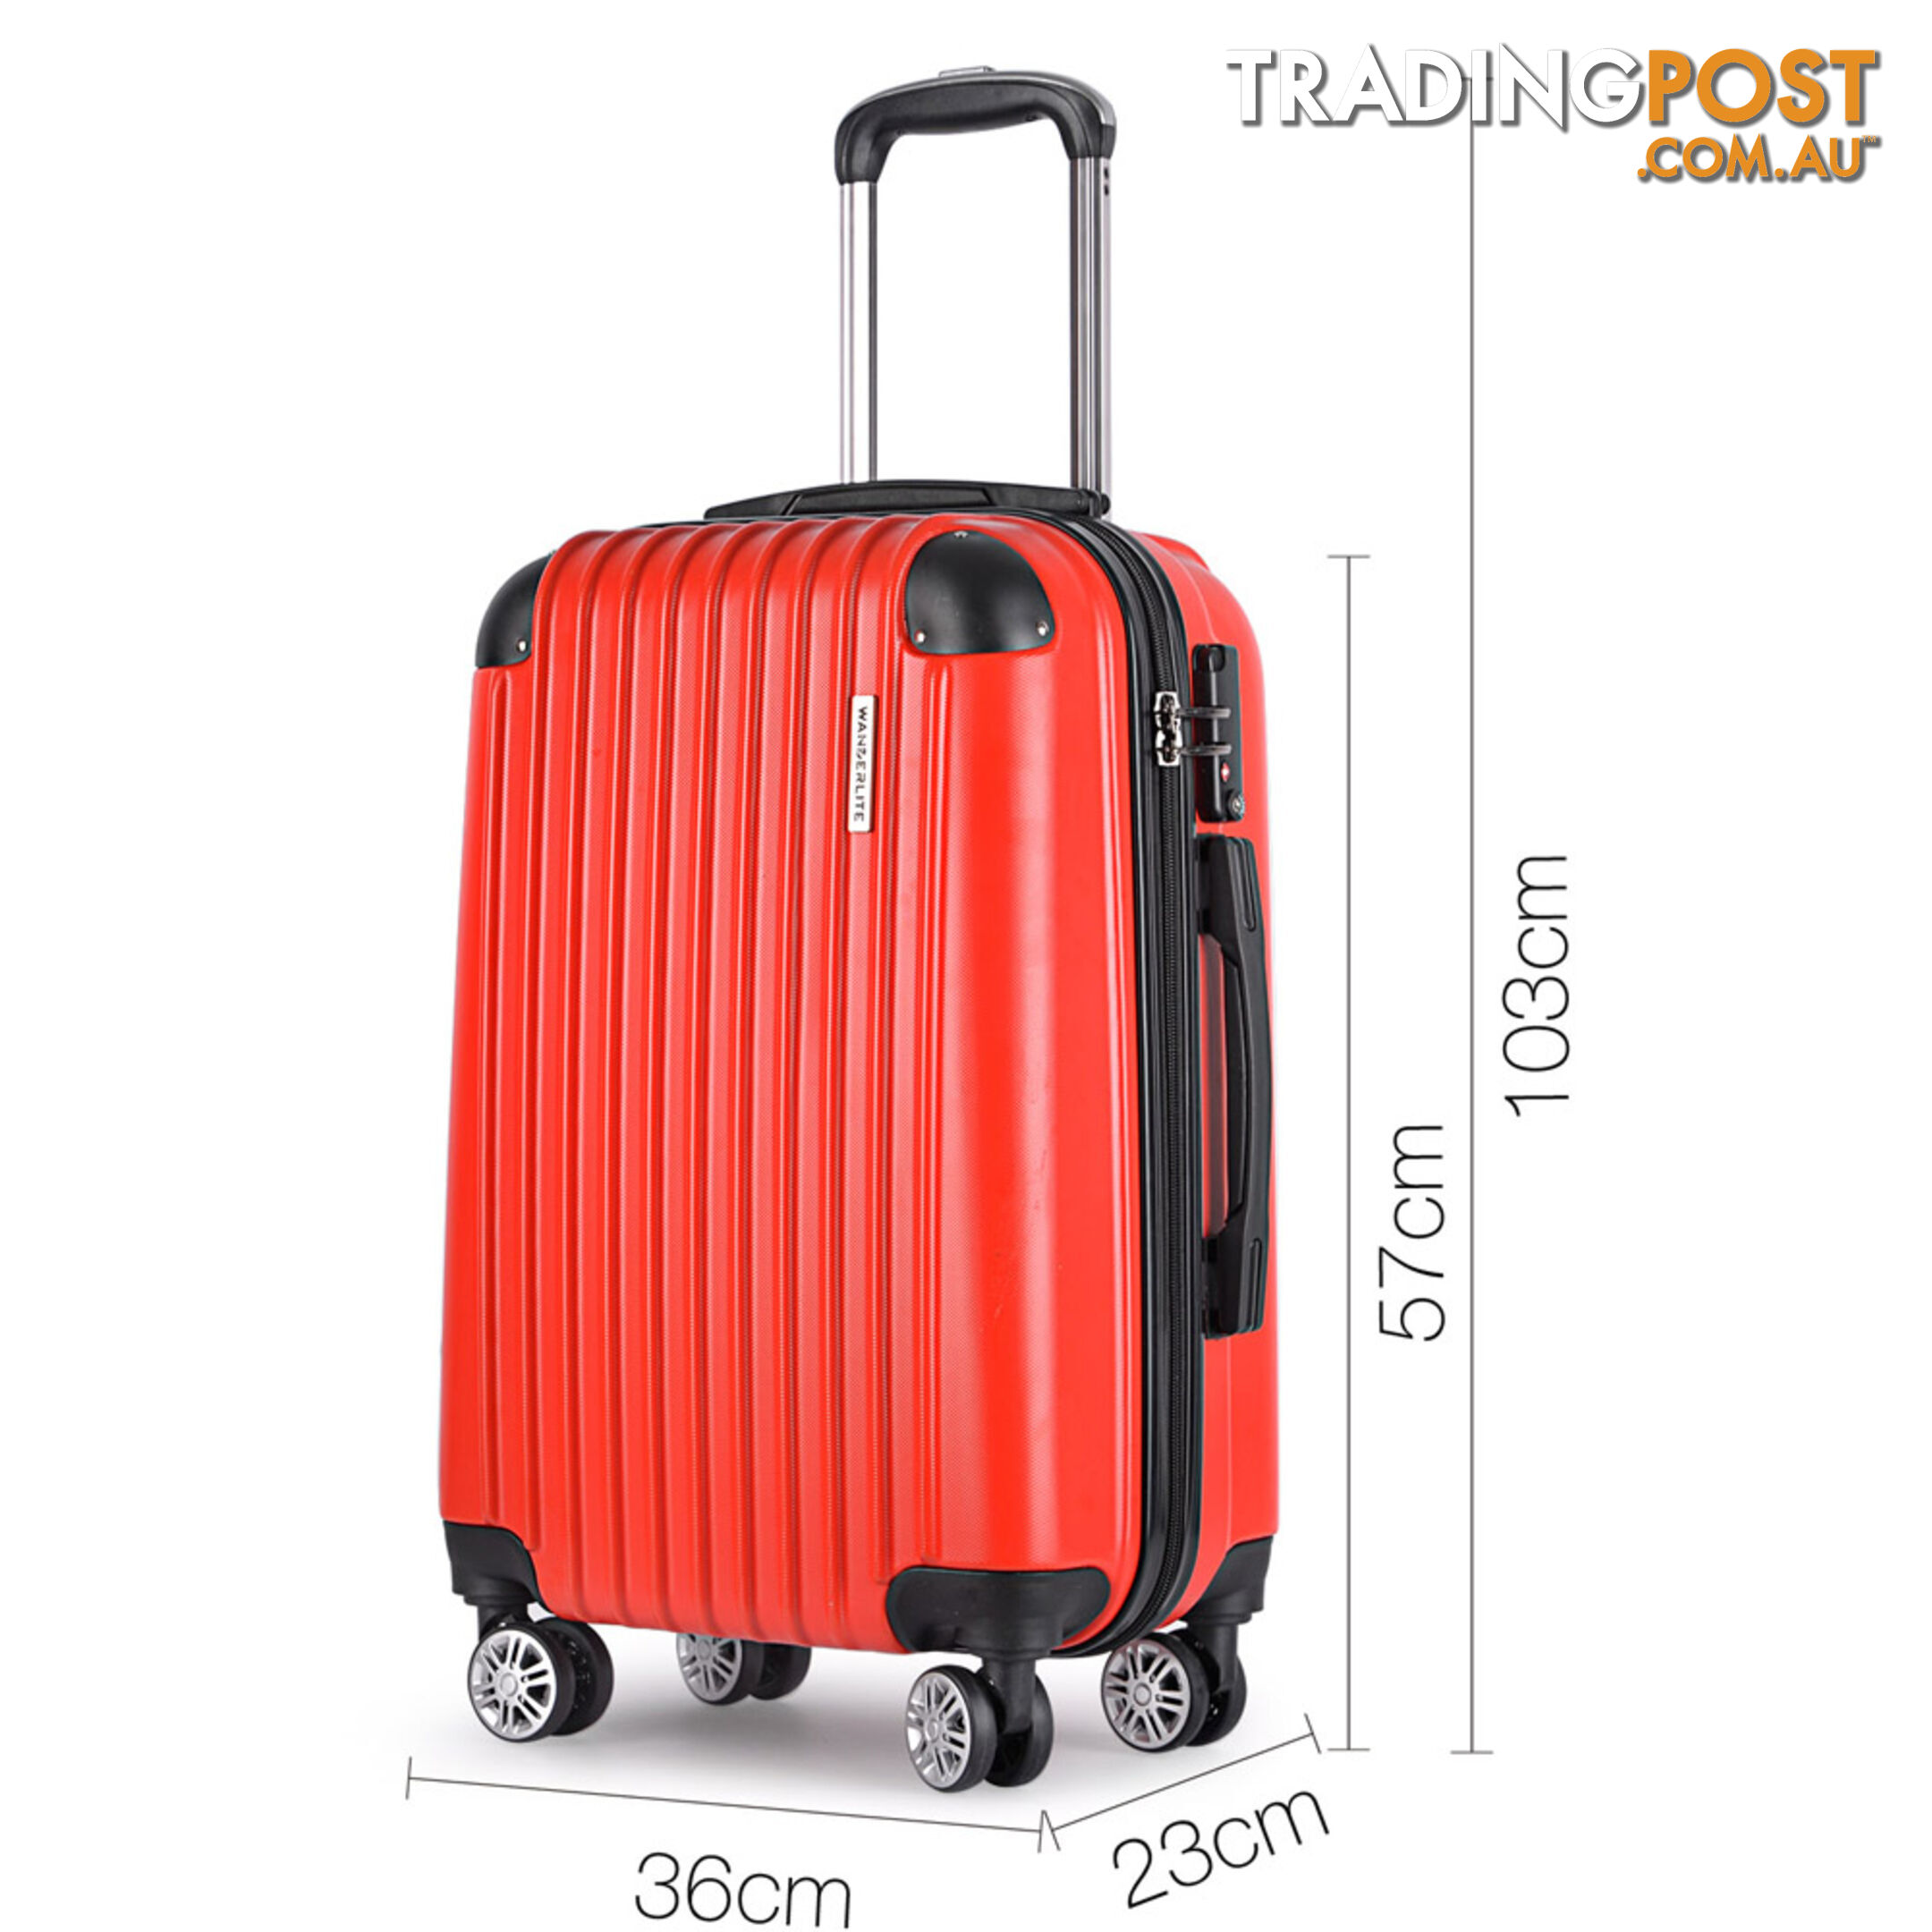 2PCS Luggage Set Hard Shell 4 Wheels Suitcase TSA Lock Travel Carry On Bag Red